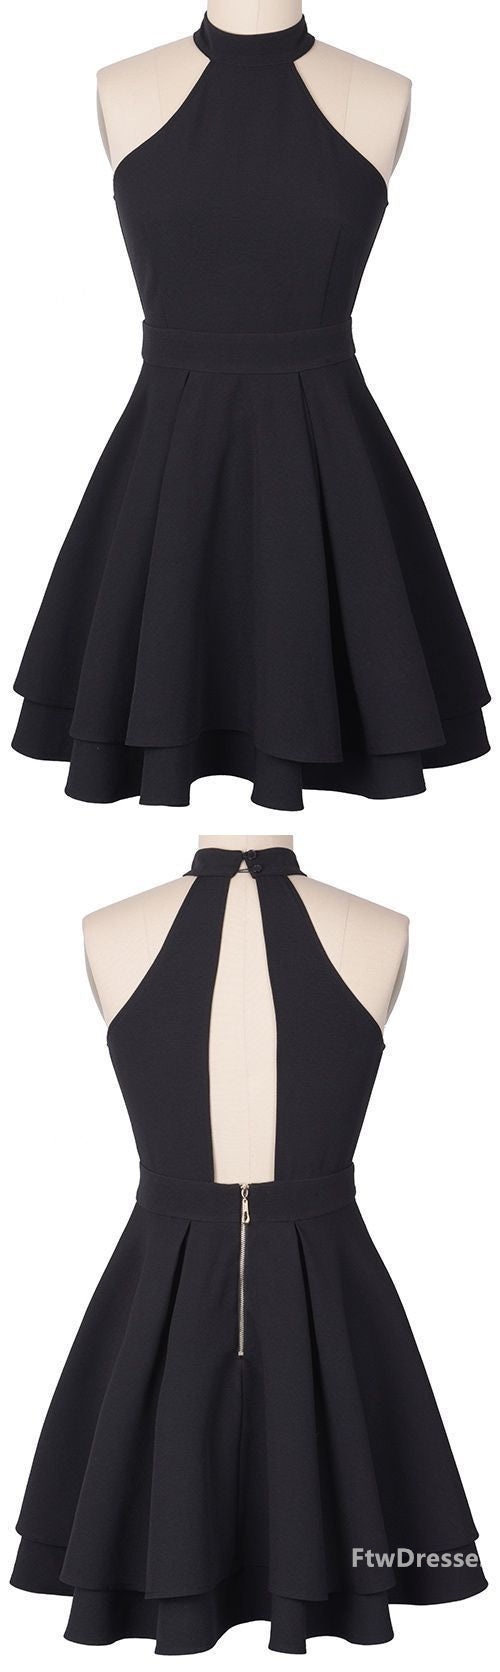 charming black halter homecoming dresses sleeveless mini prom homecoming dress